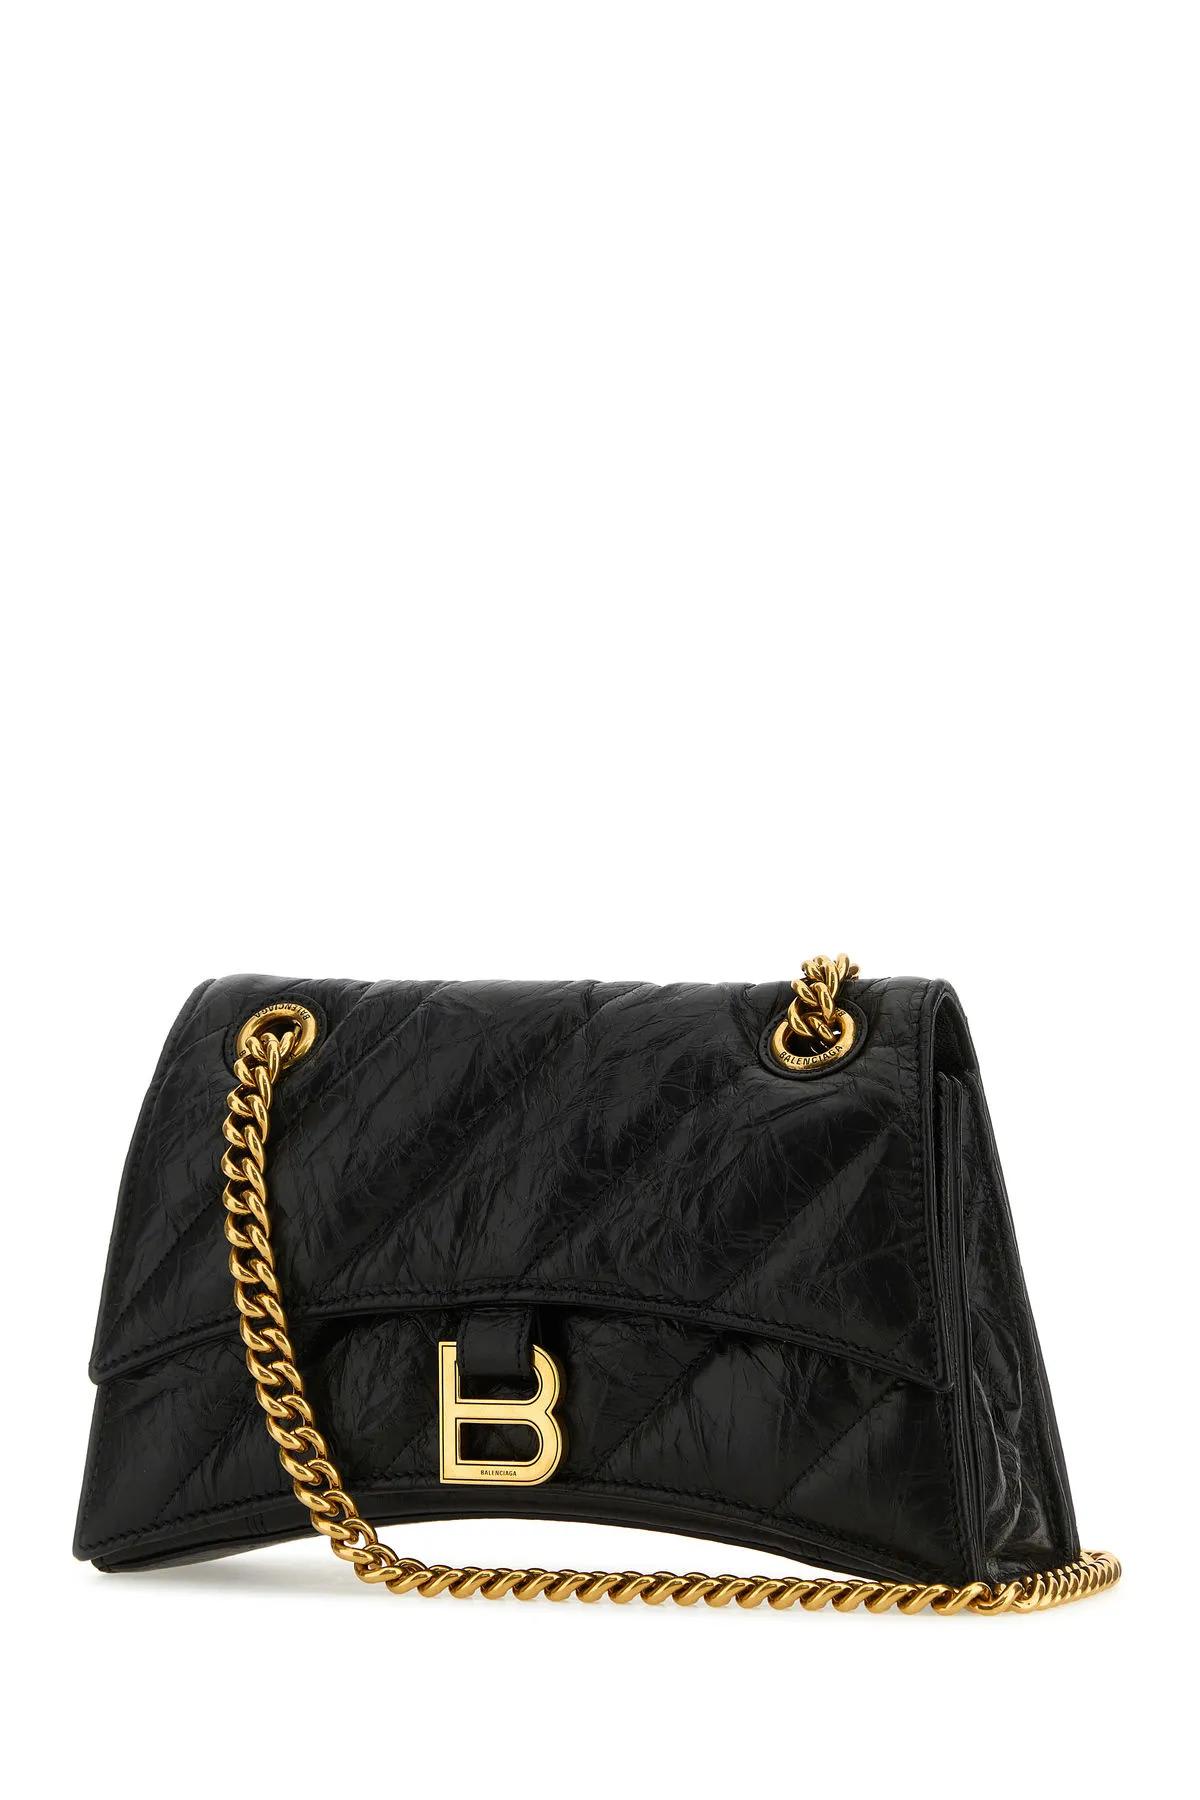 Shop Balenciaga Black Leather Small Crush Shoulder Bag